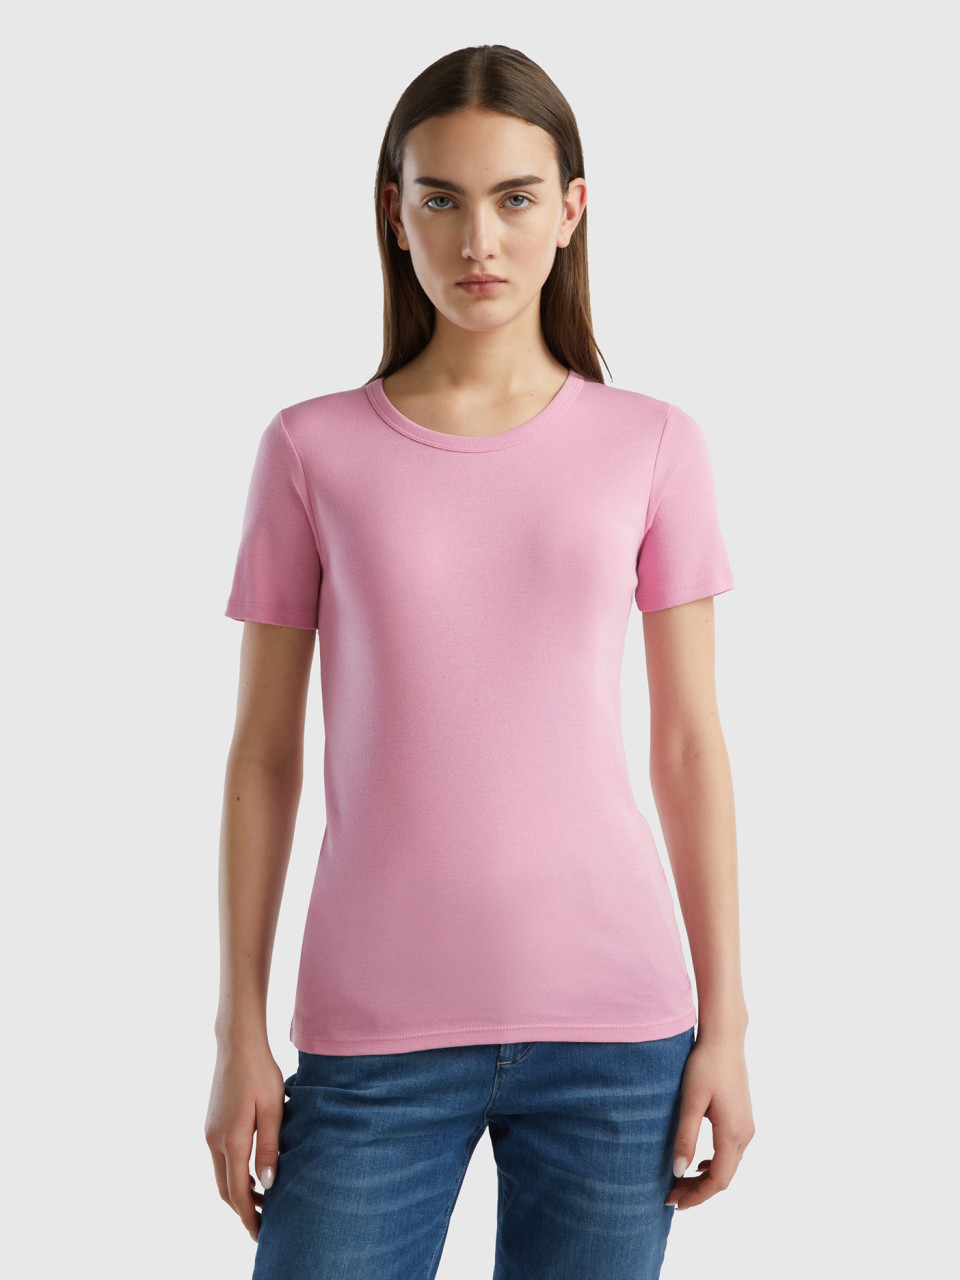 Benetton, Camiseta De Algodón De Fibra Larga, Rosa Pastel, Mujer